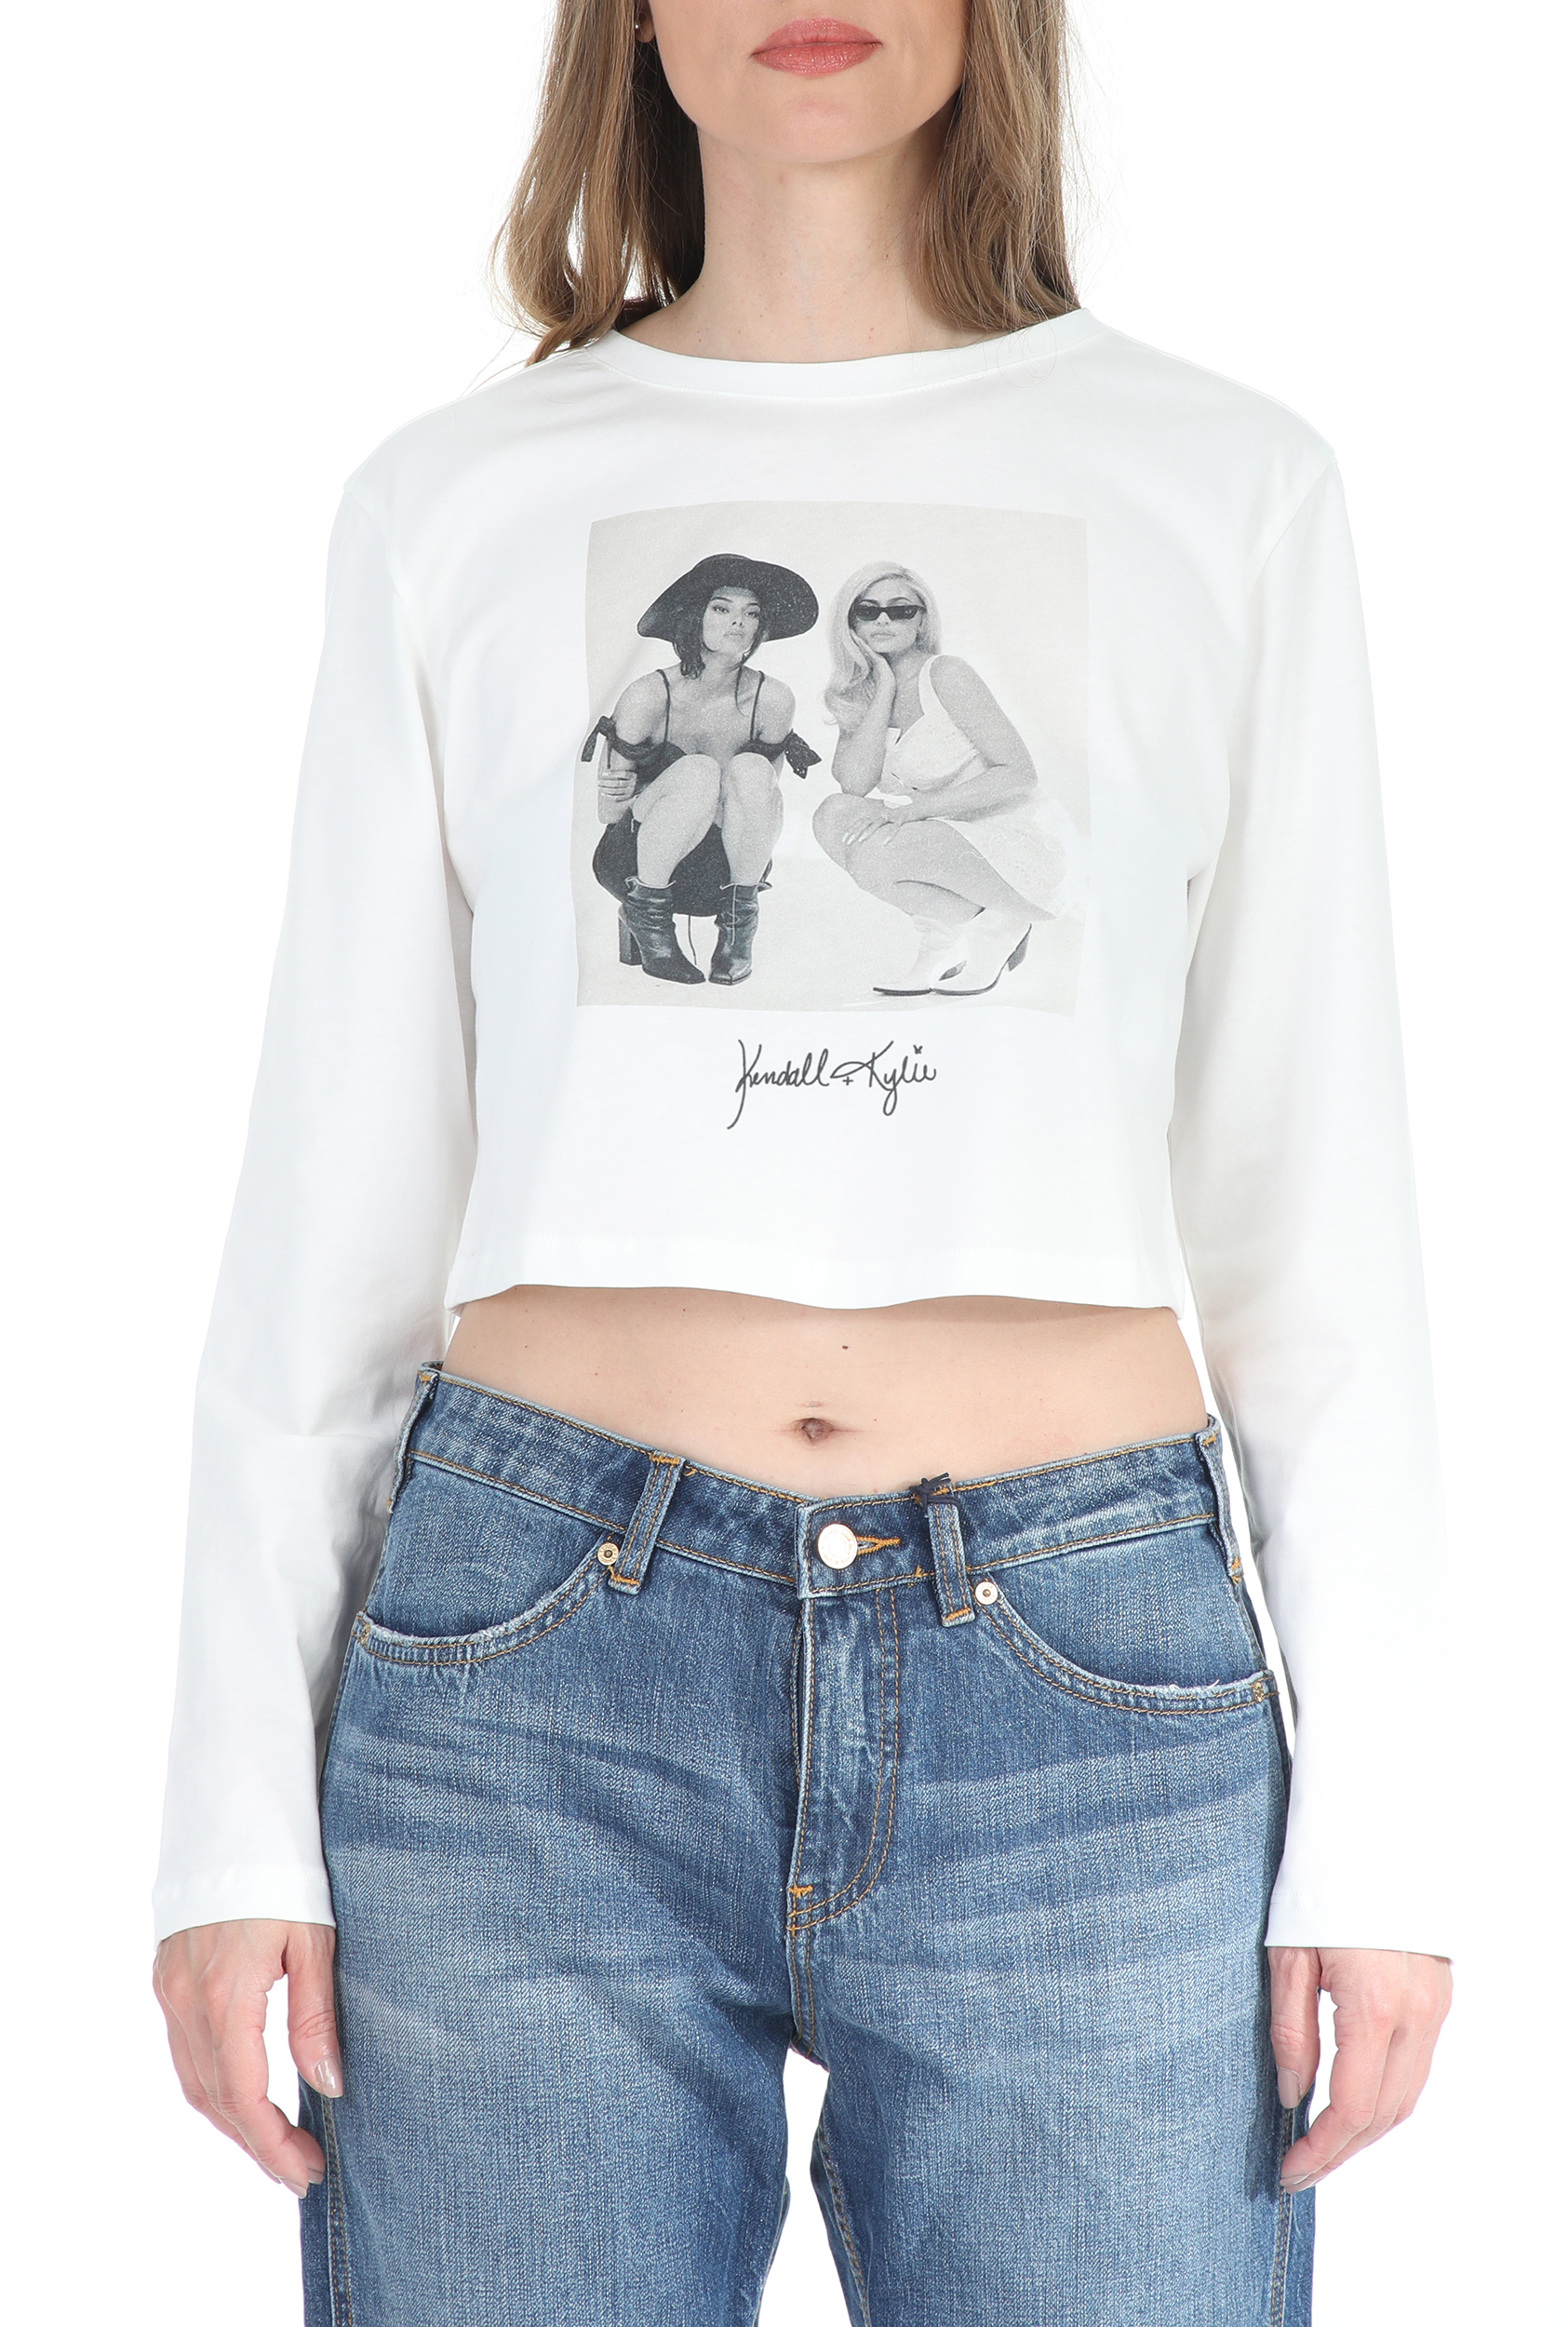 KENDALL+KYLIE – Γυναικεία μακρυμάνικη μπλούζα KENDALL+KYLIE λευκή 1801717.0-0090